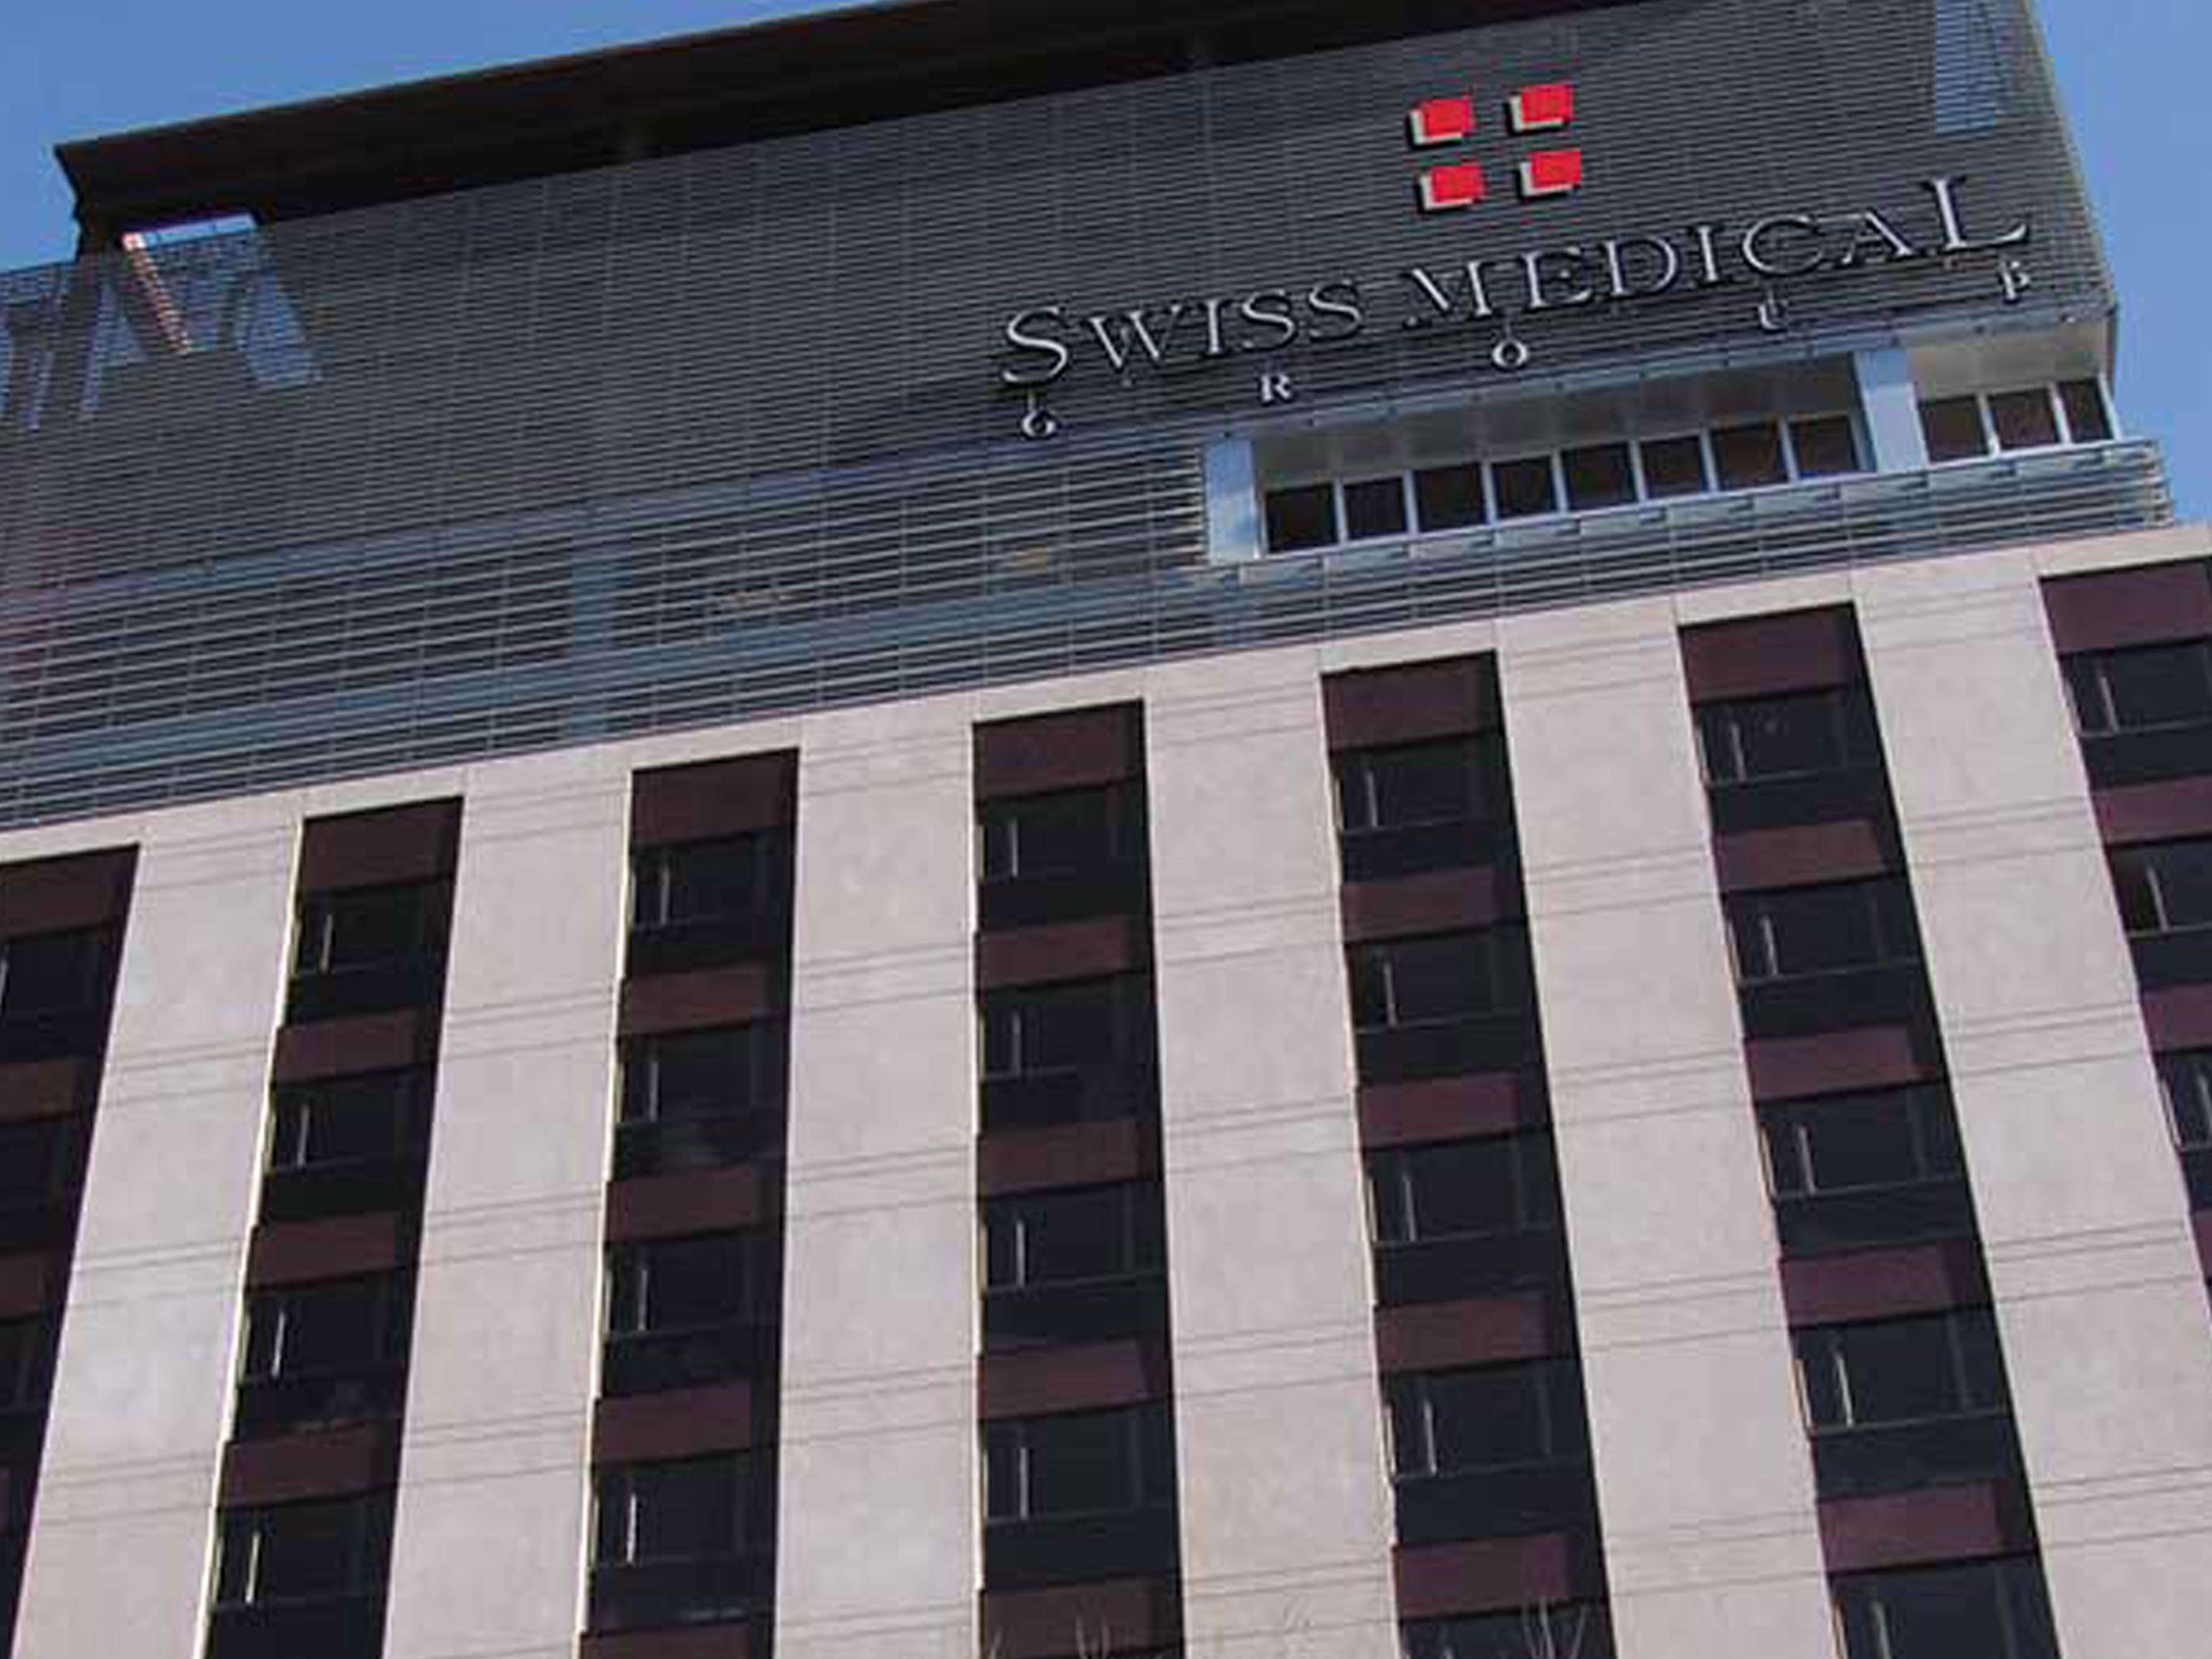 Swiss Medical Group building, video screenshot